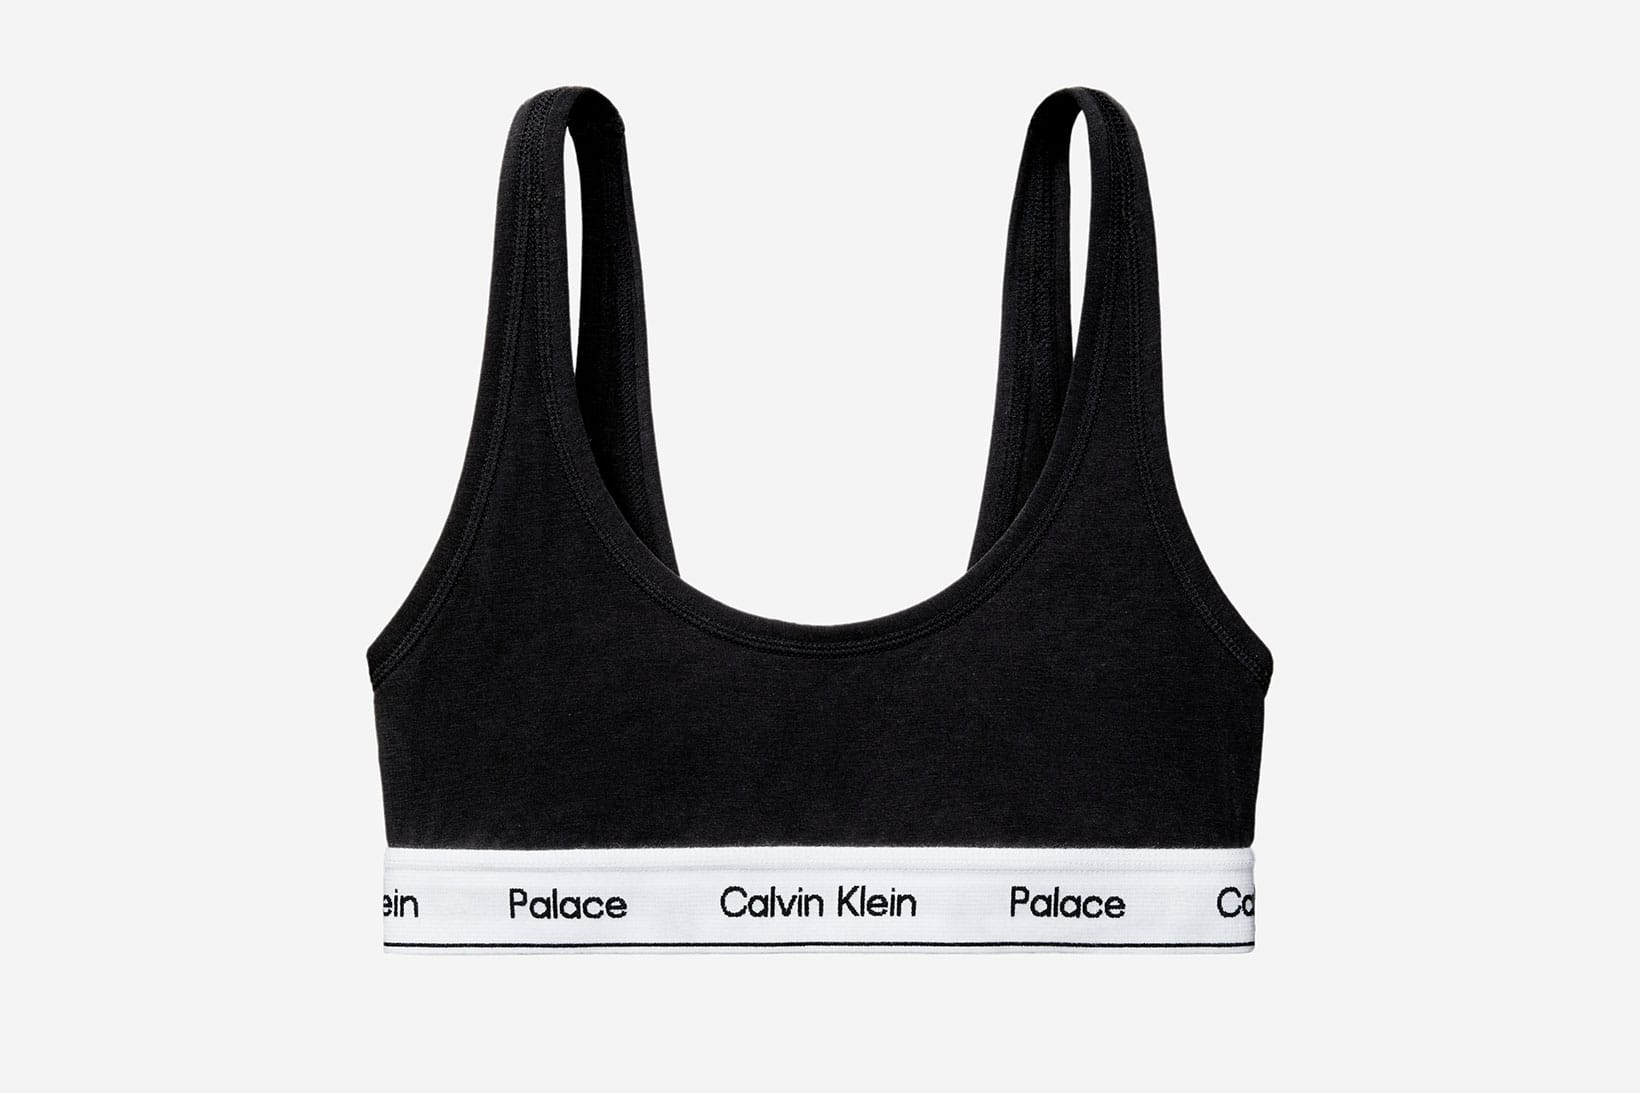 Calvin Klein x Palace Collaboration Full Lineup | HYPEBAE